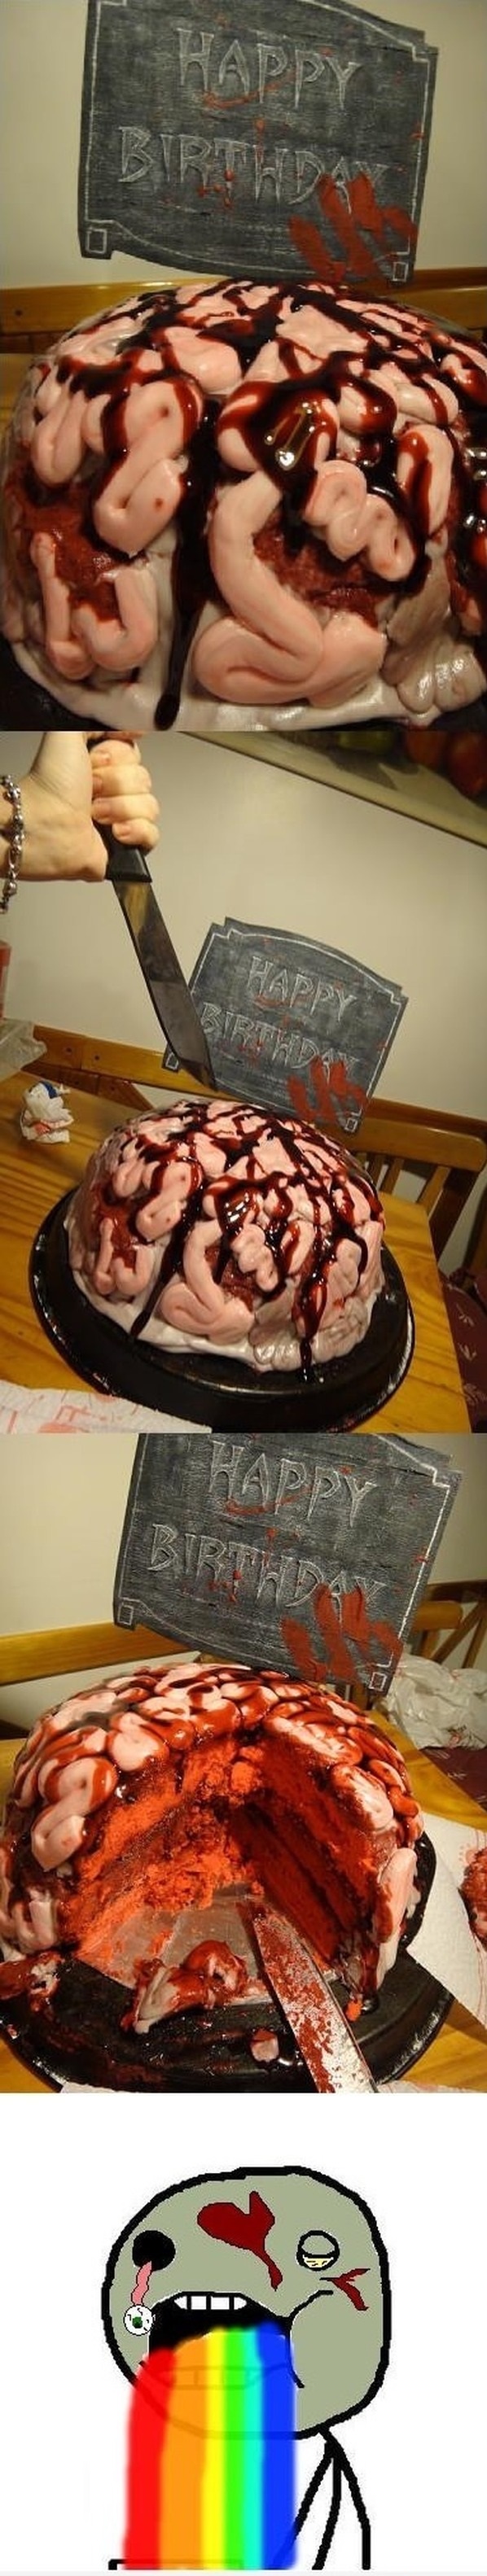 funny-picture-happy-birthday-cake-brain